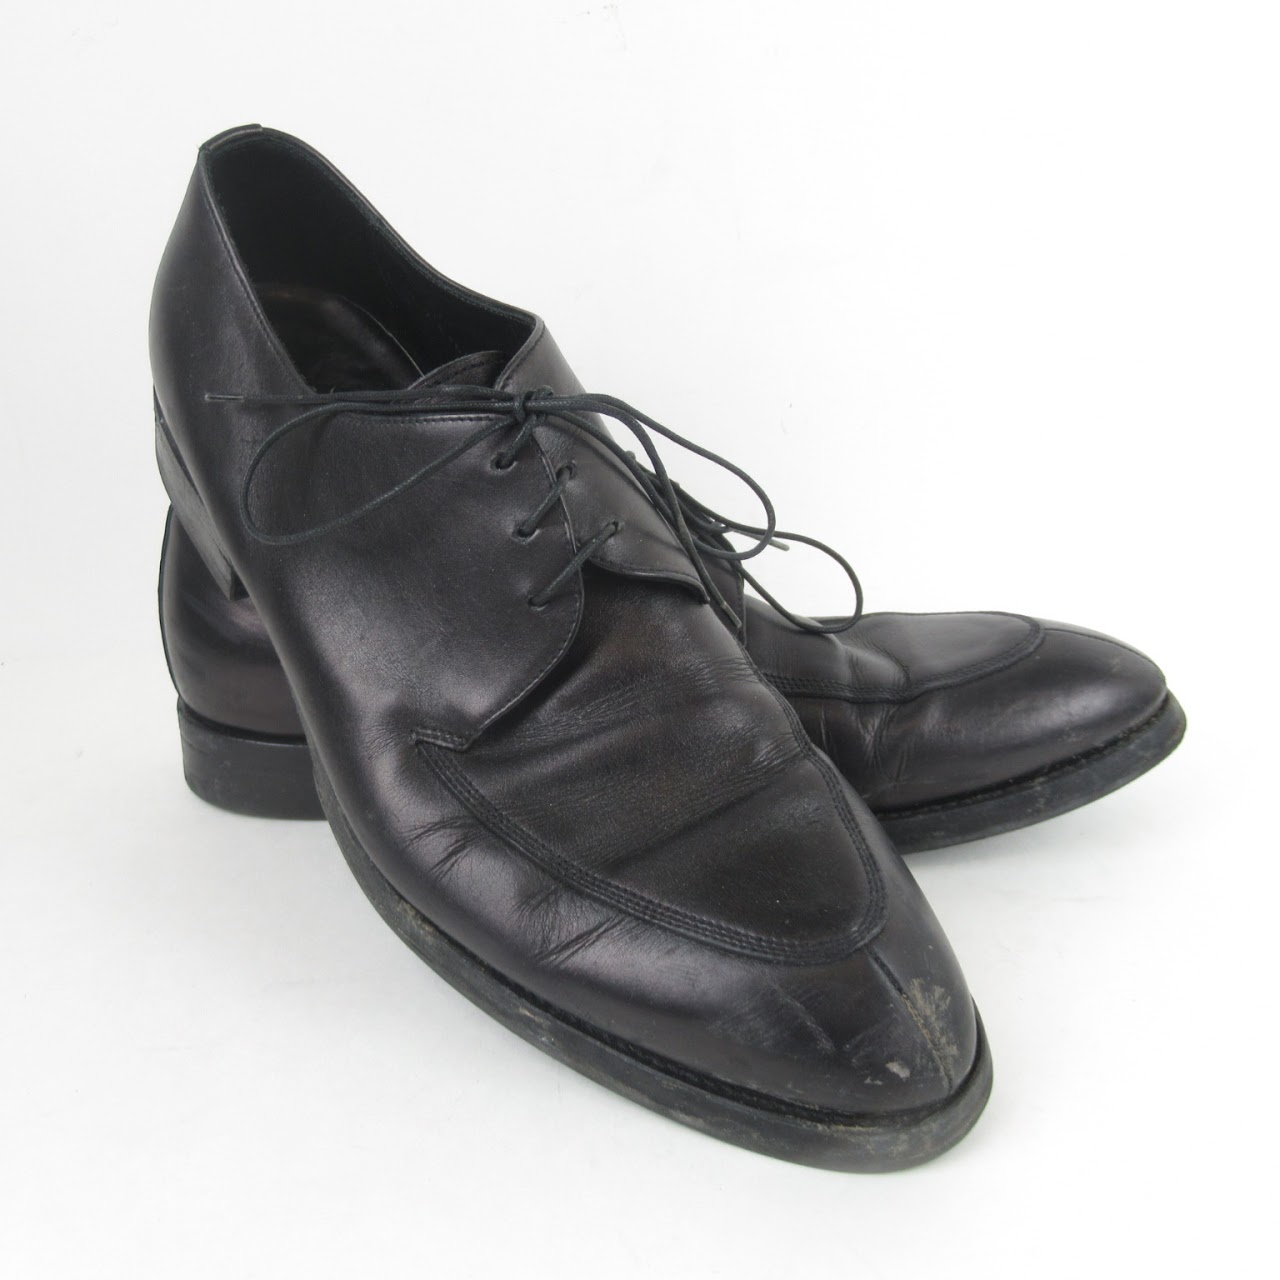 Prada Black Leather Derby Shoes